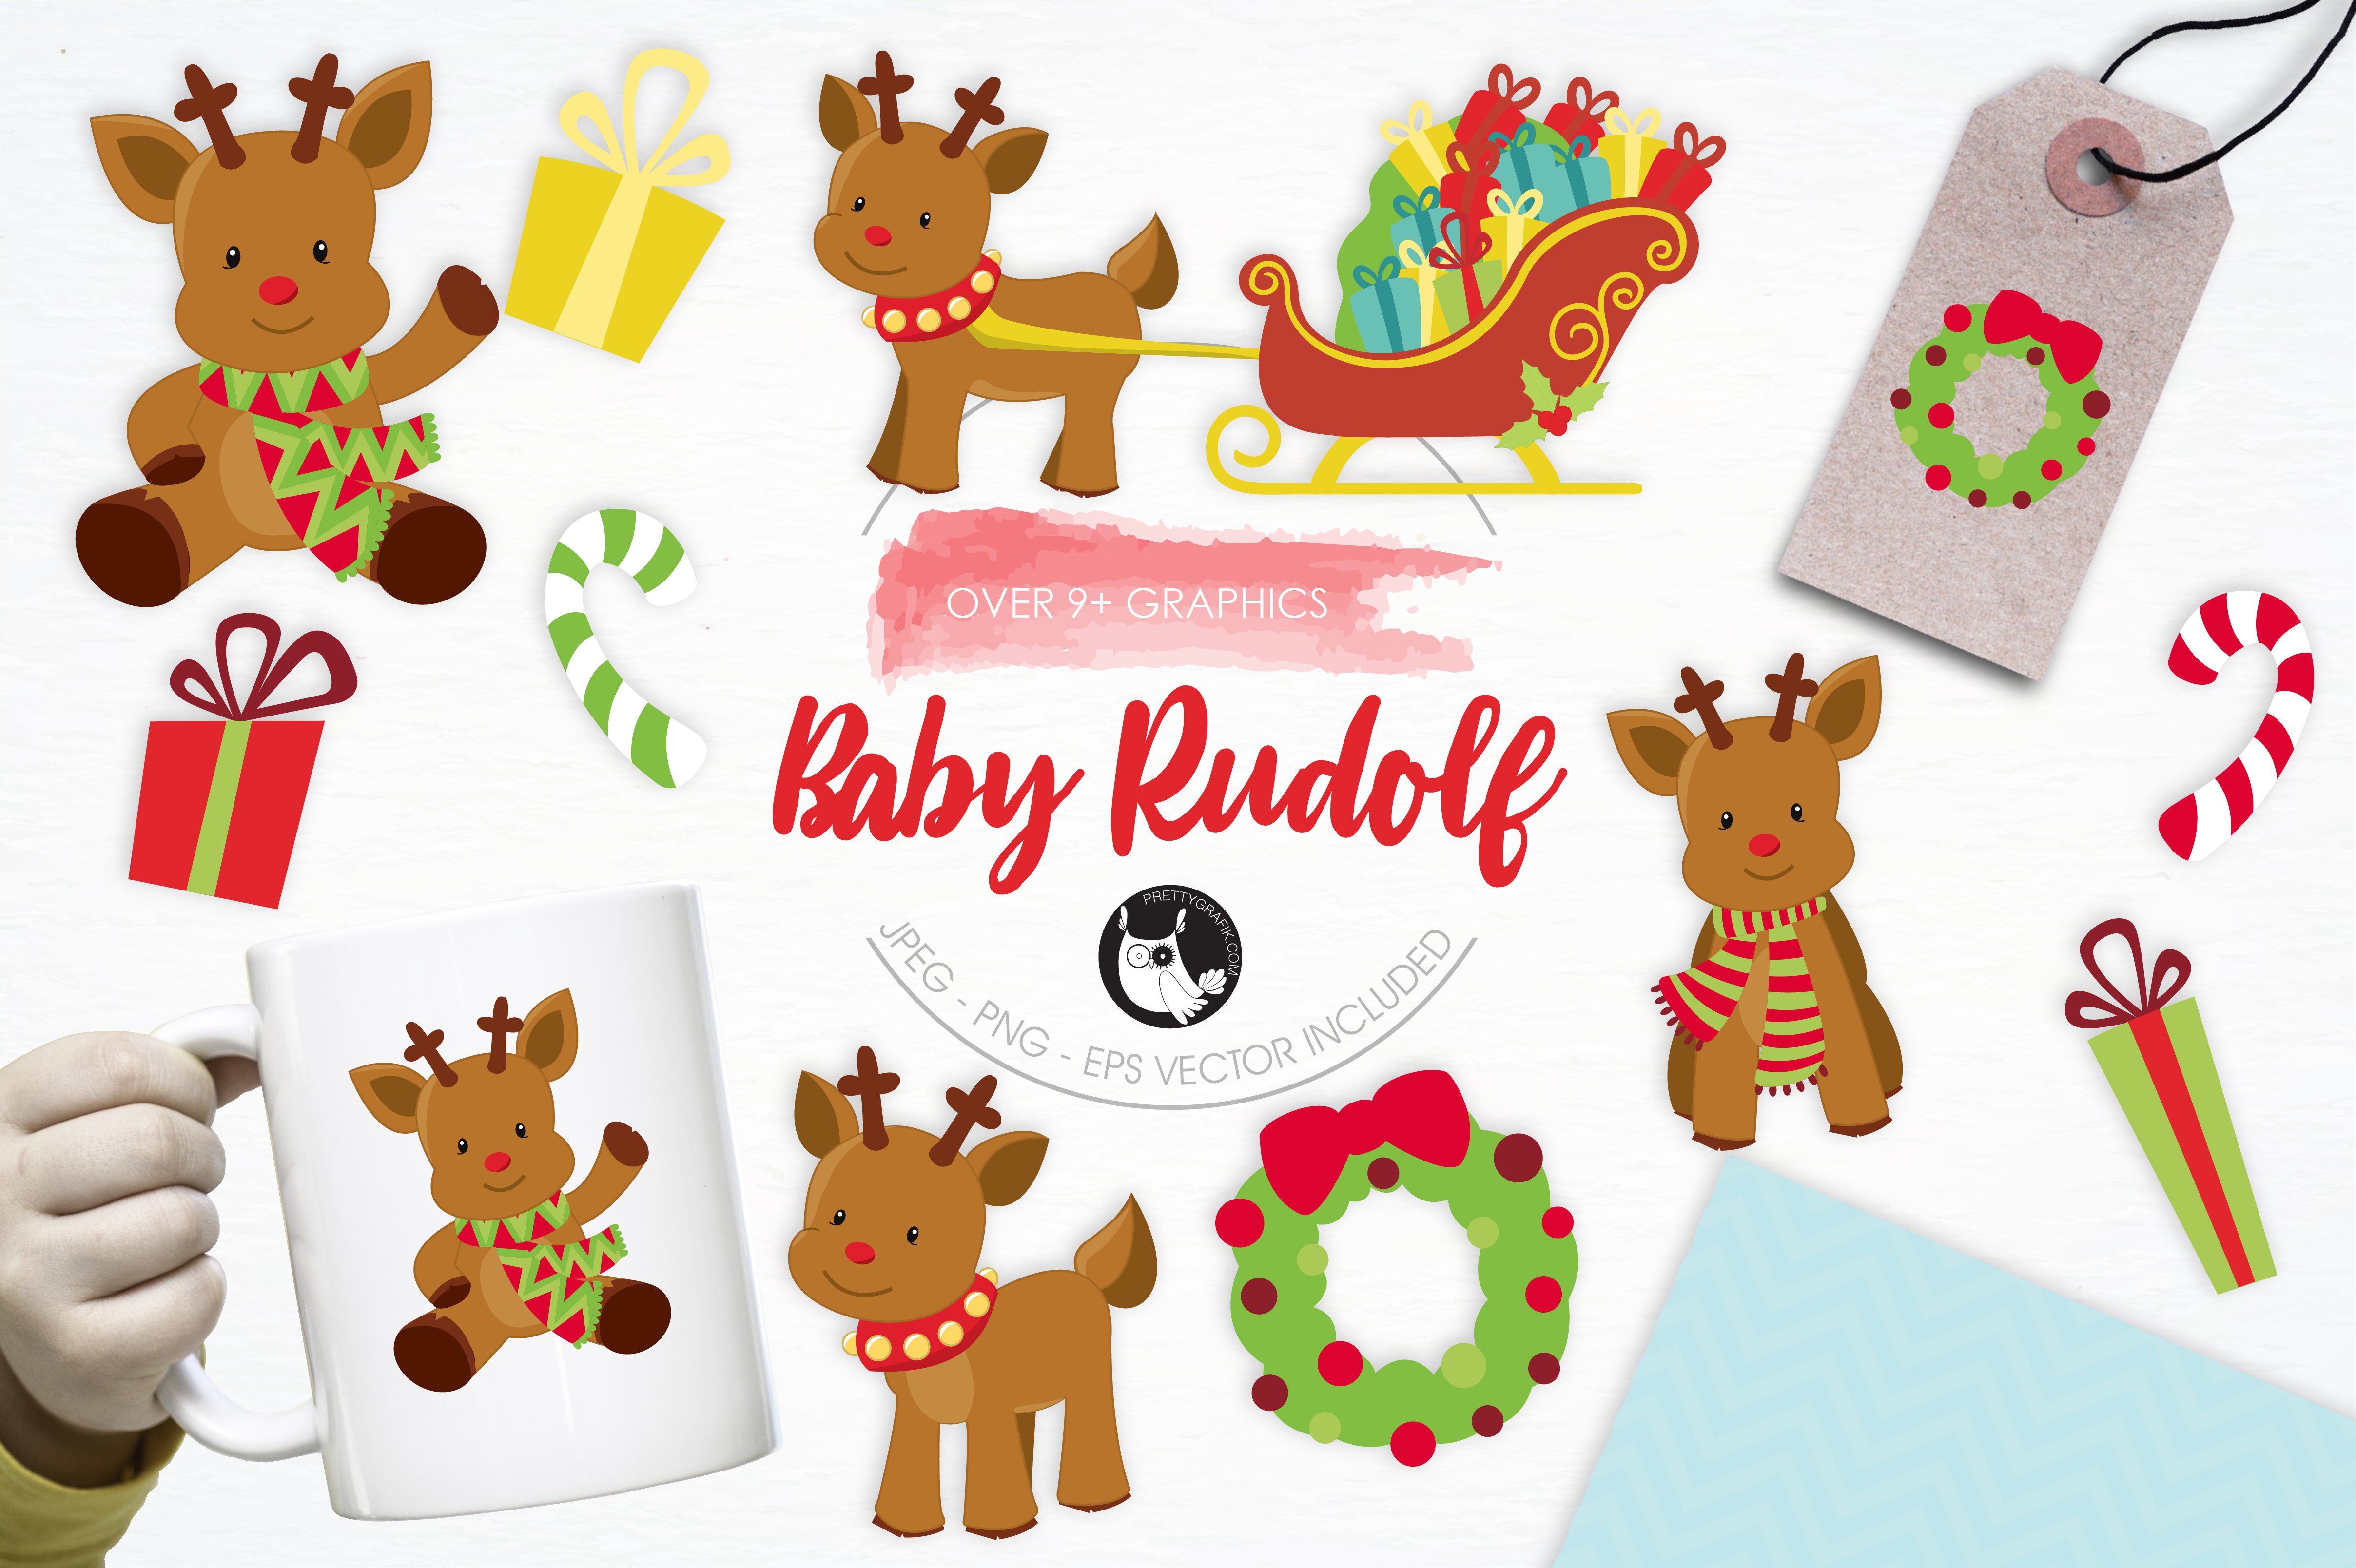 Baby Rudolf illustration pack - Vector Image